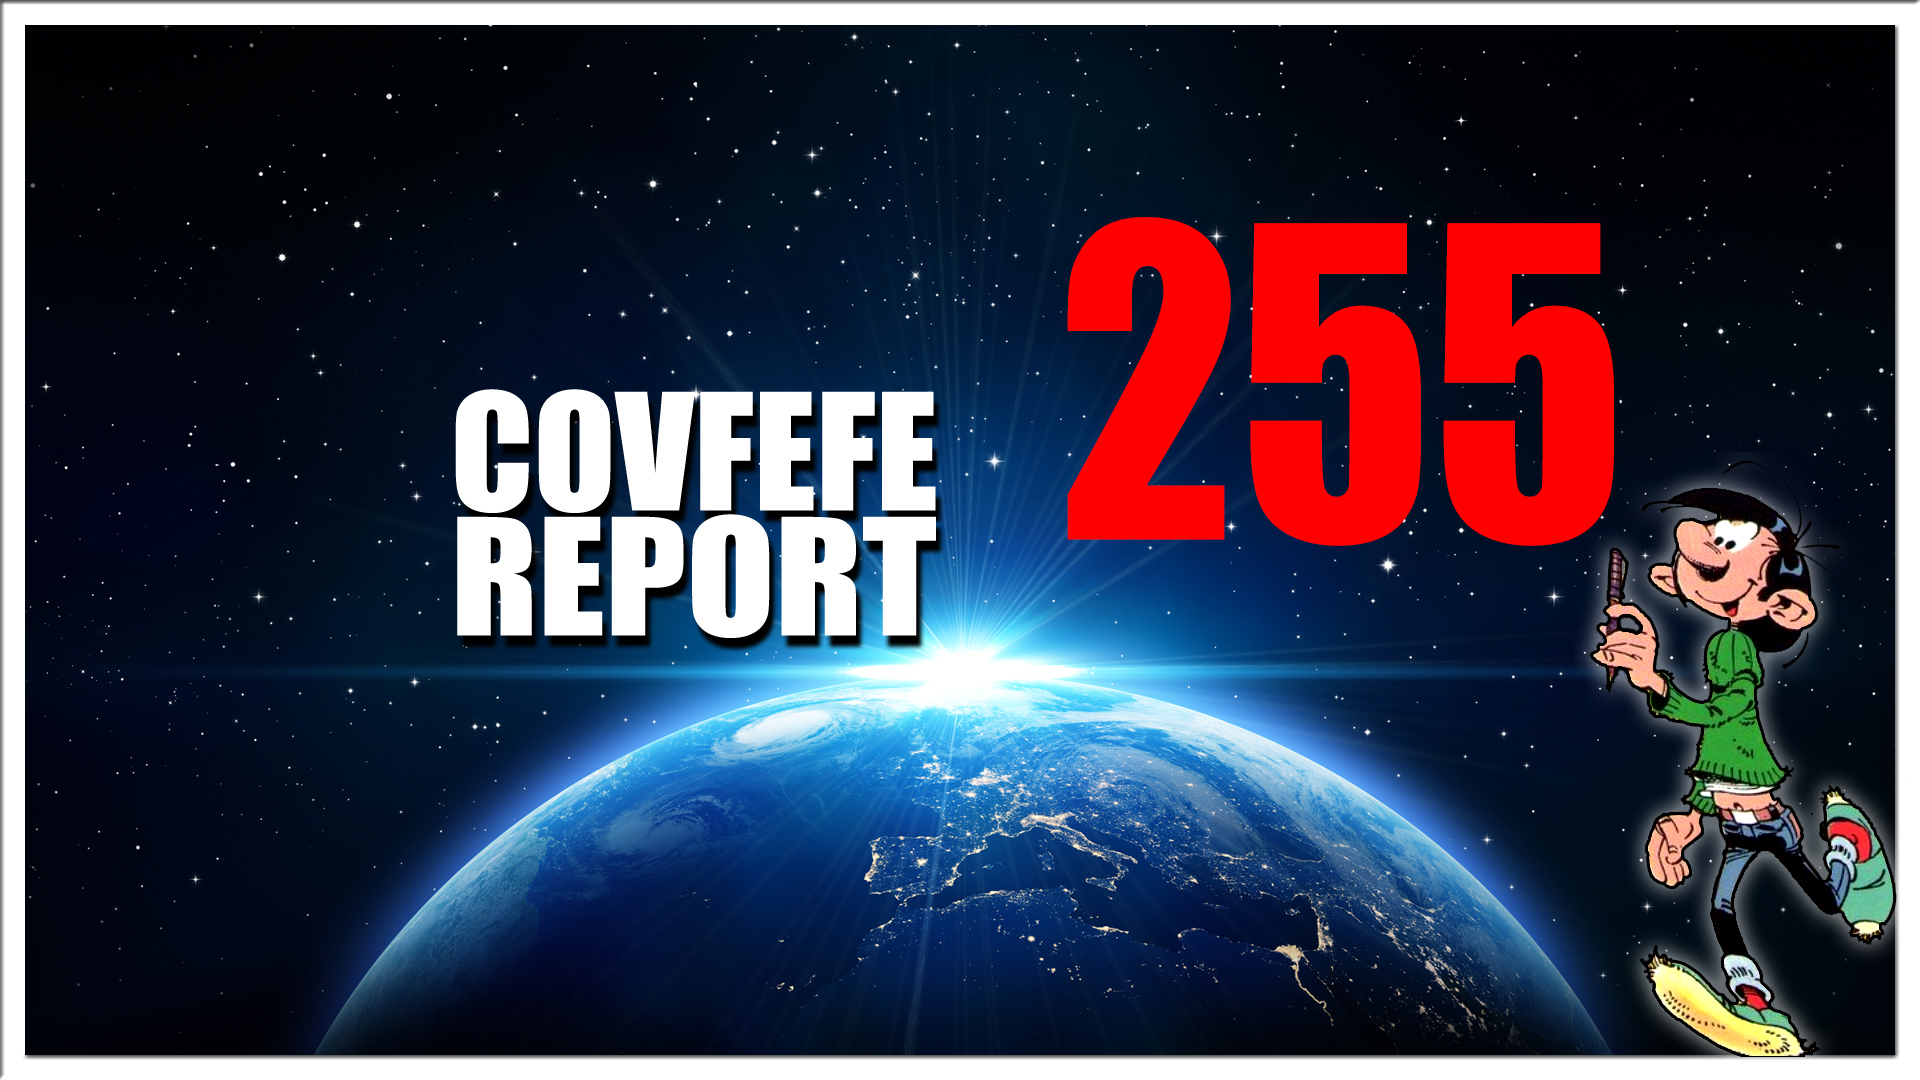 Covfefe Report 255. ngt